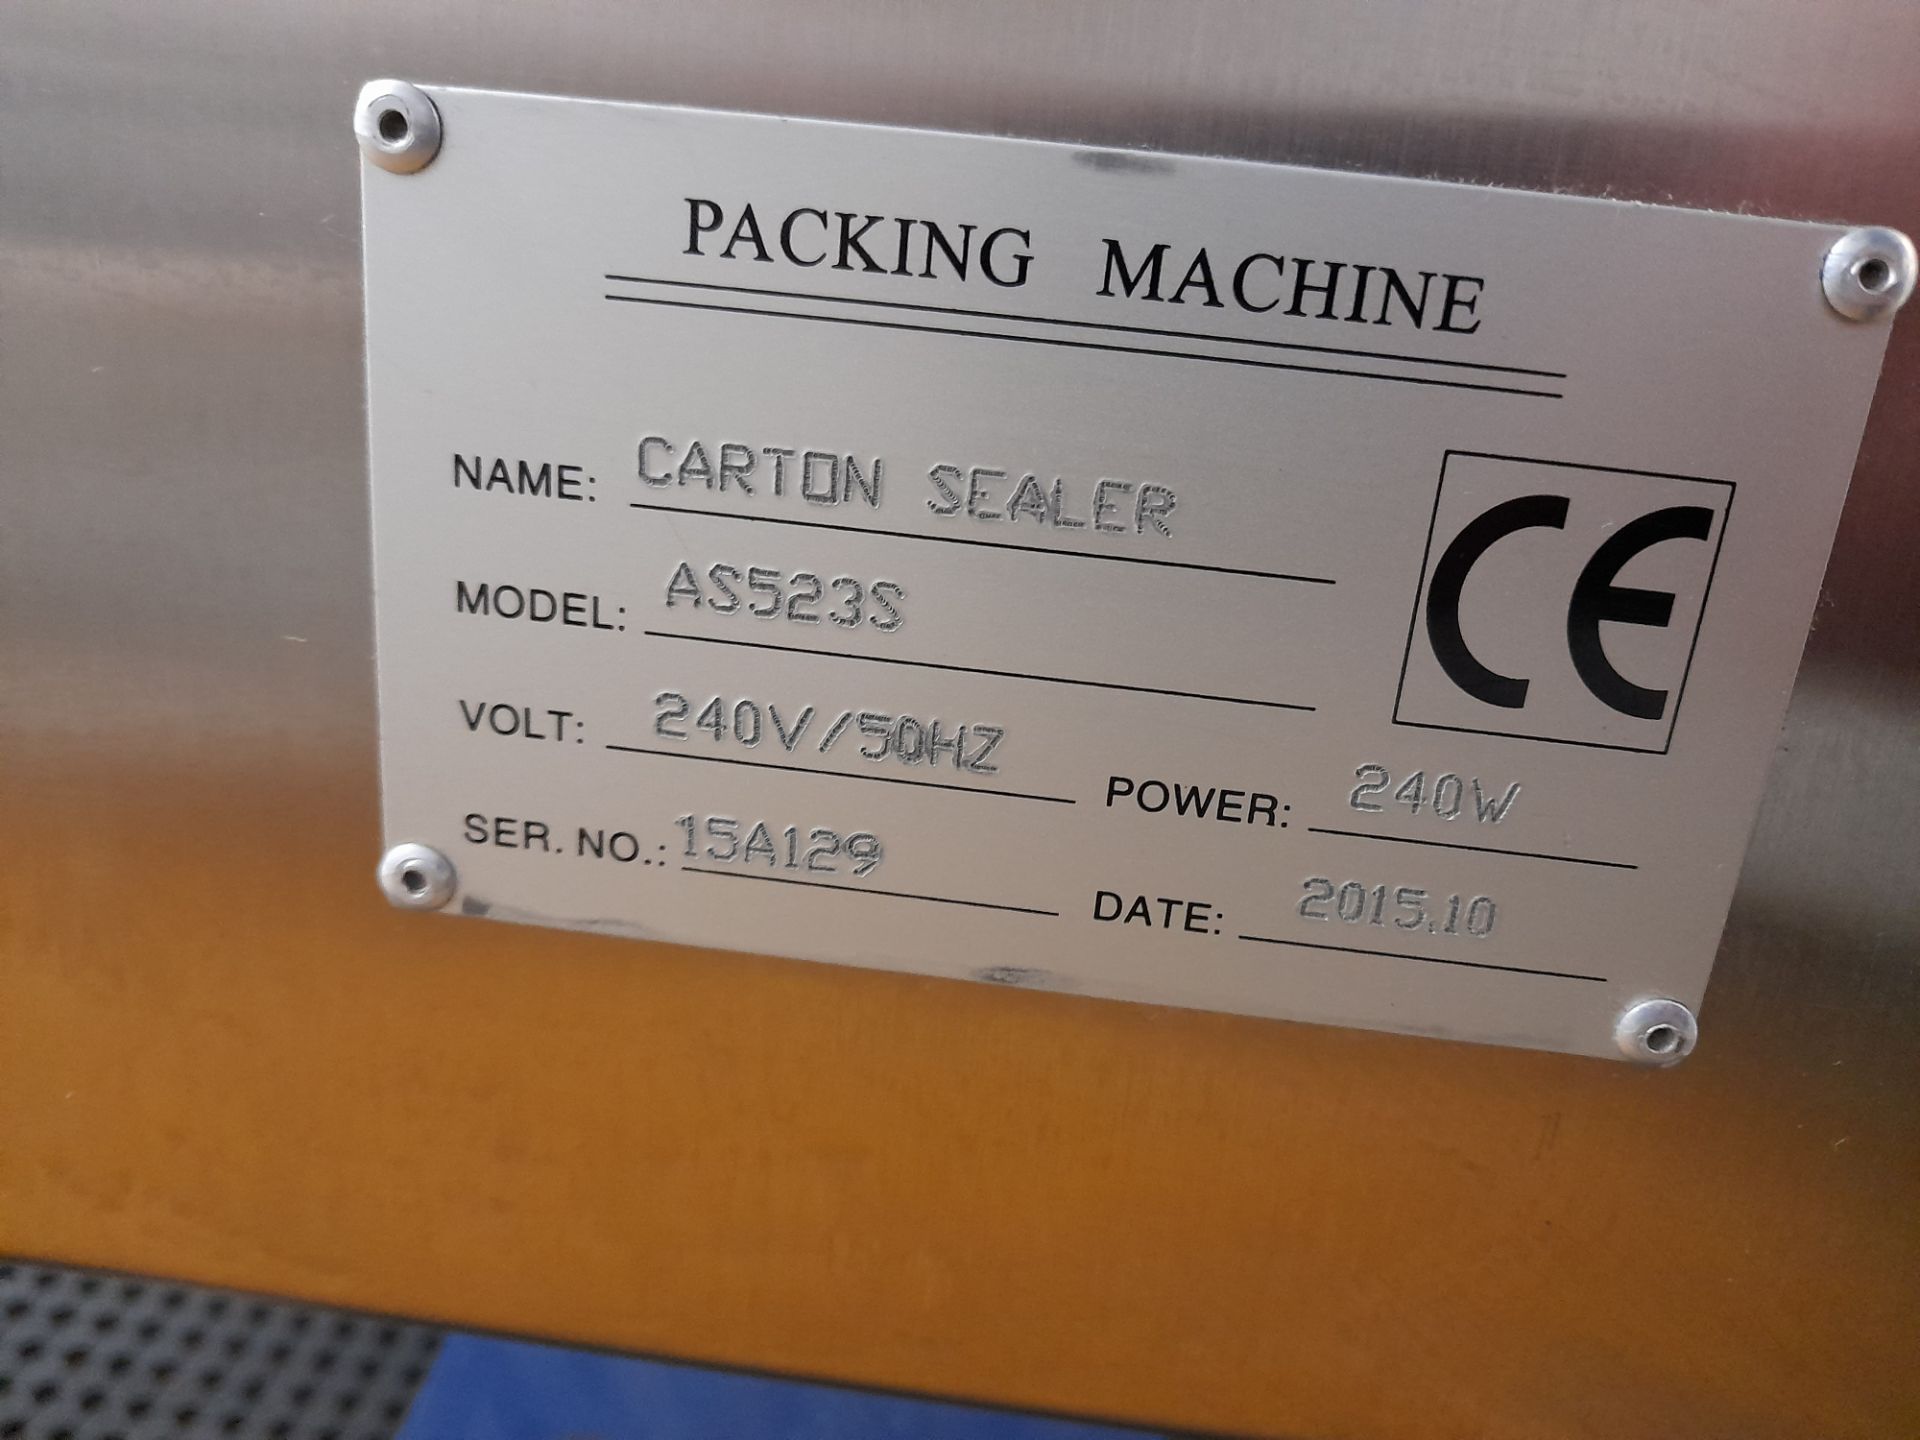 Mobile Packaging Machine Carton Sealer, Model AS5235, Serial Number 15A129, Year 10/2015 - Image 6 of 6